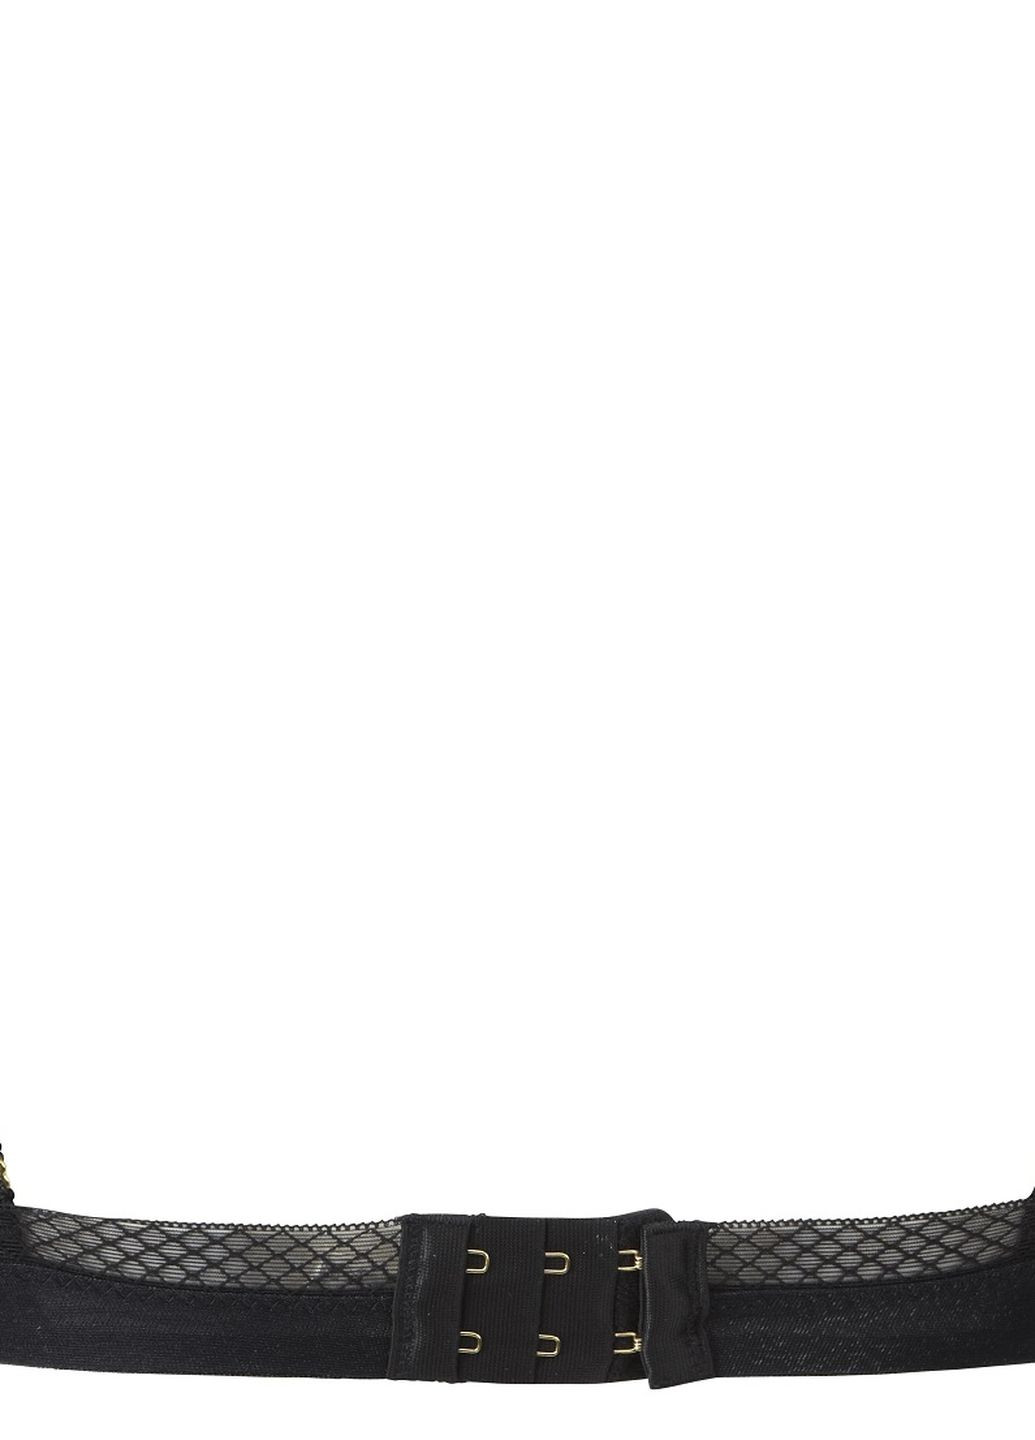 Чёрный планж бюстгальтер 6275 Gossard с косточками полиамид, полиэстер, эластан